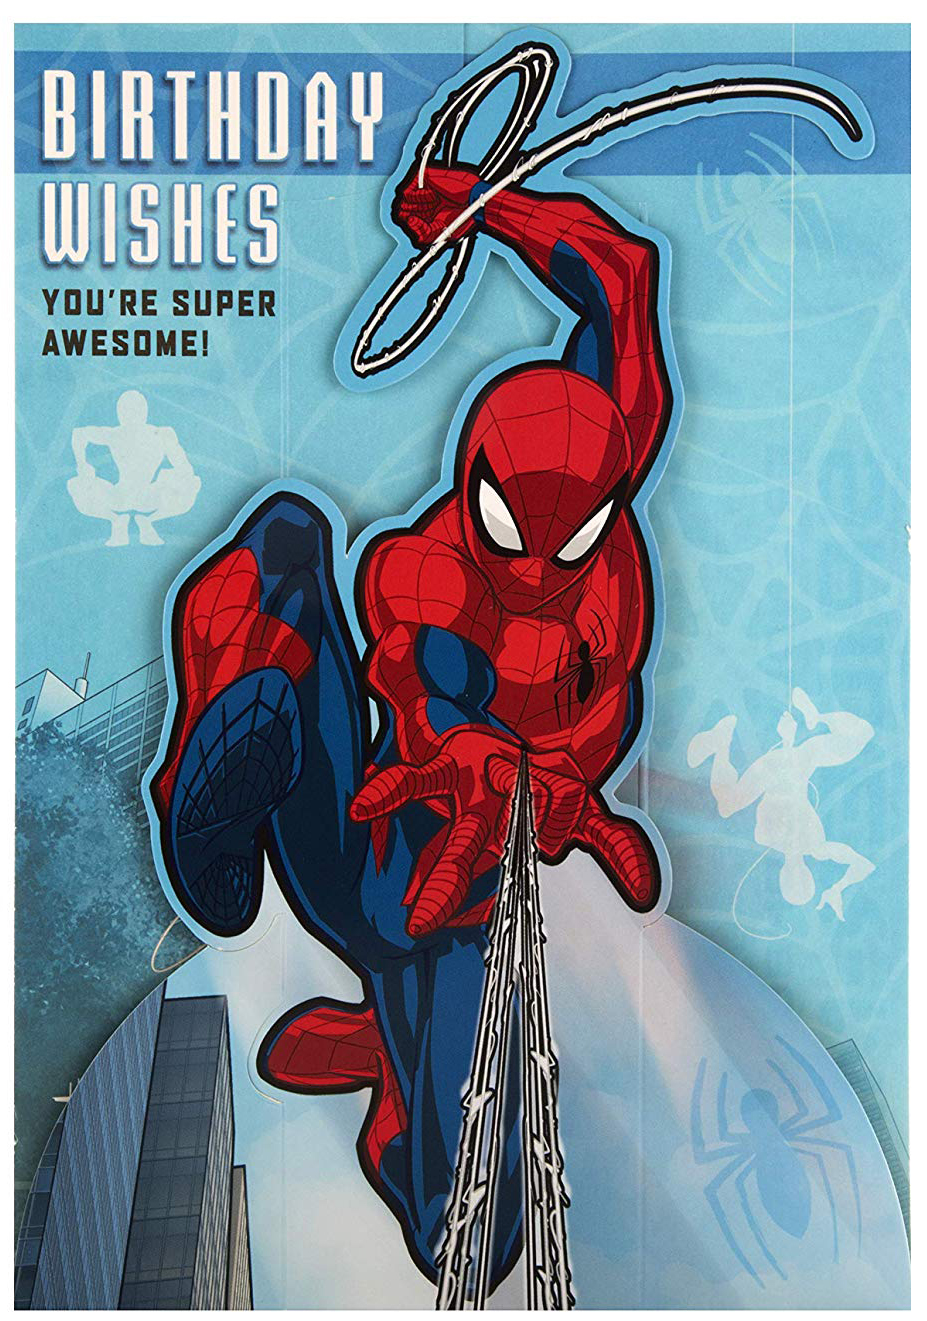 Above: Great for older kids, a Spider-Man design from Hallmark.